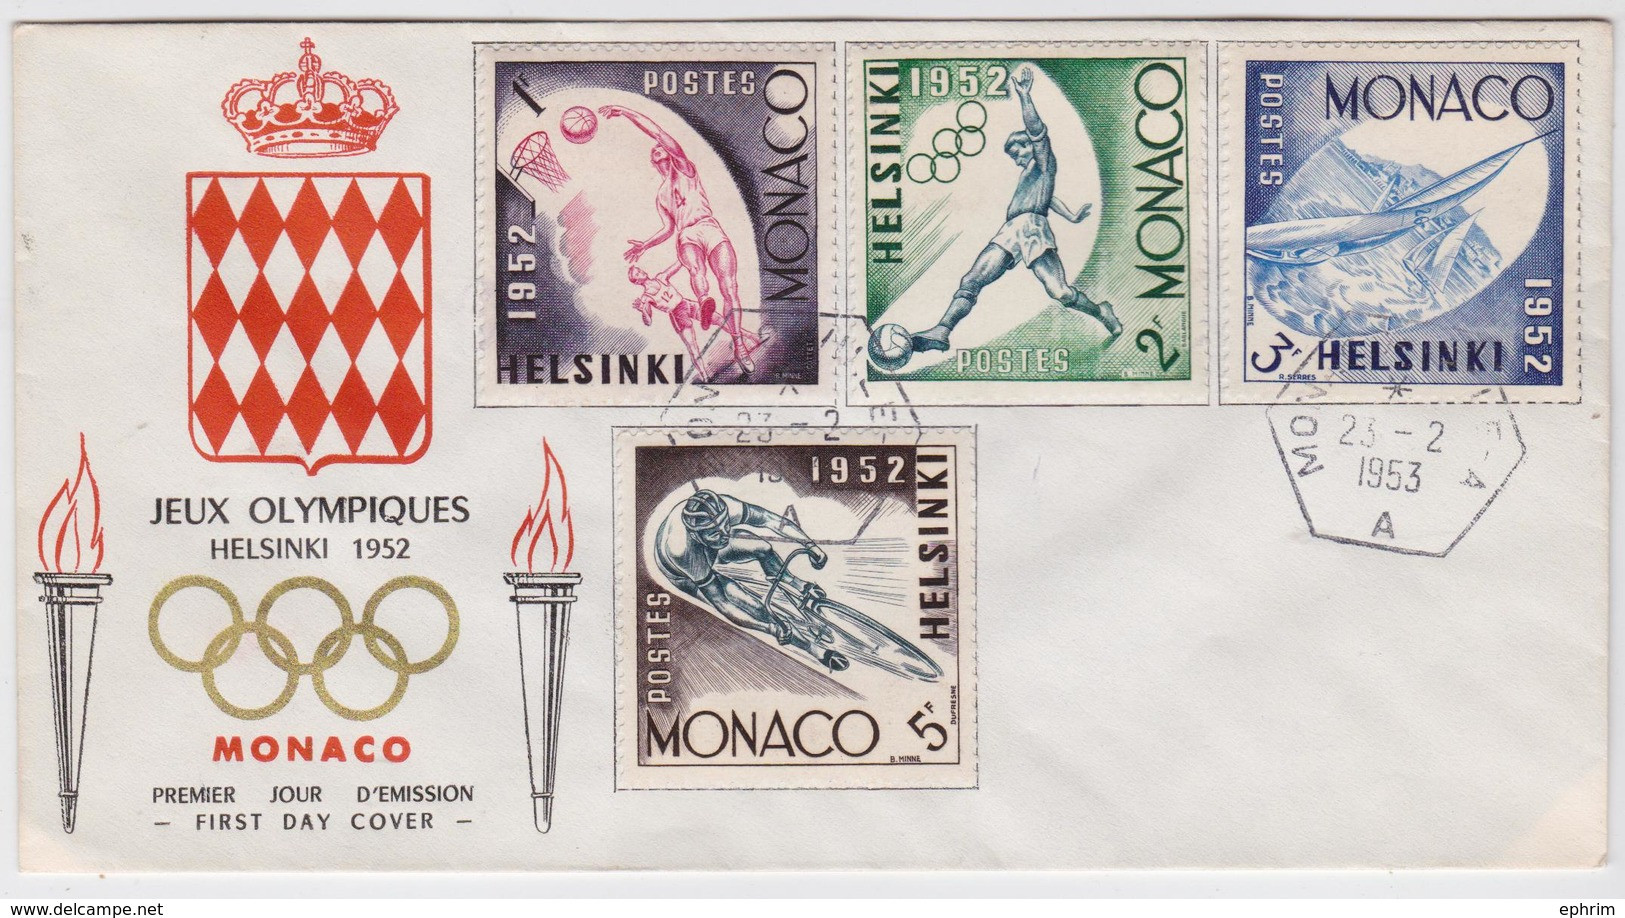 Jeux Olympiques Helsinki 1952 - FDC Enveloppe Premier Jour Monaco - Timbre Cyclisme - Basket-Ball Stamp Football Voile - Sommer 1952: Helsinki